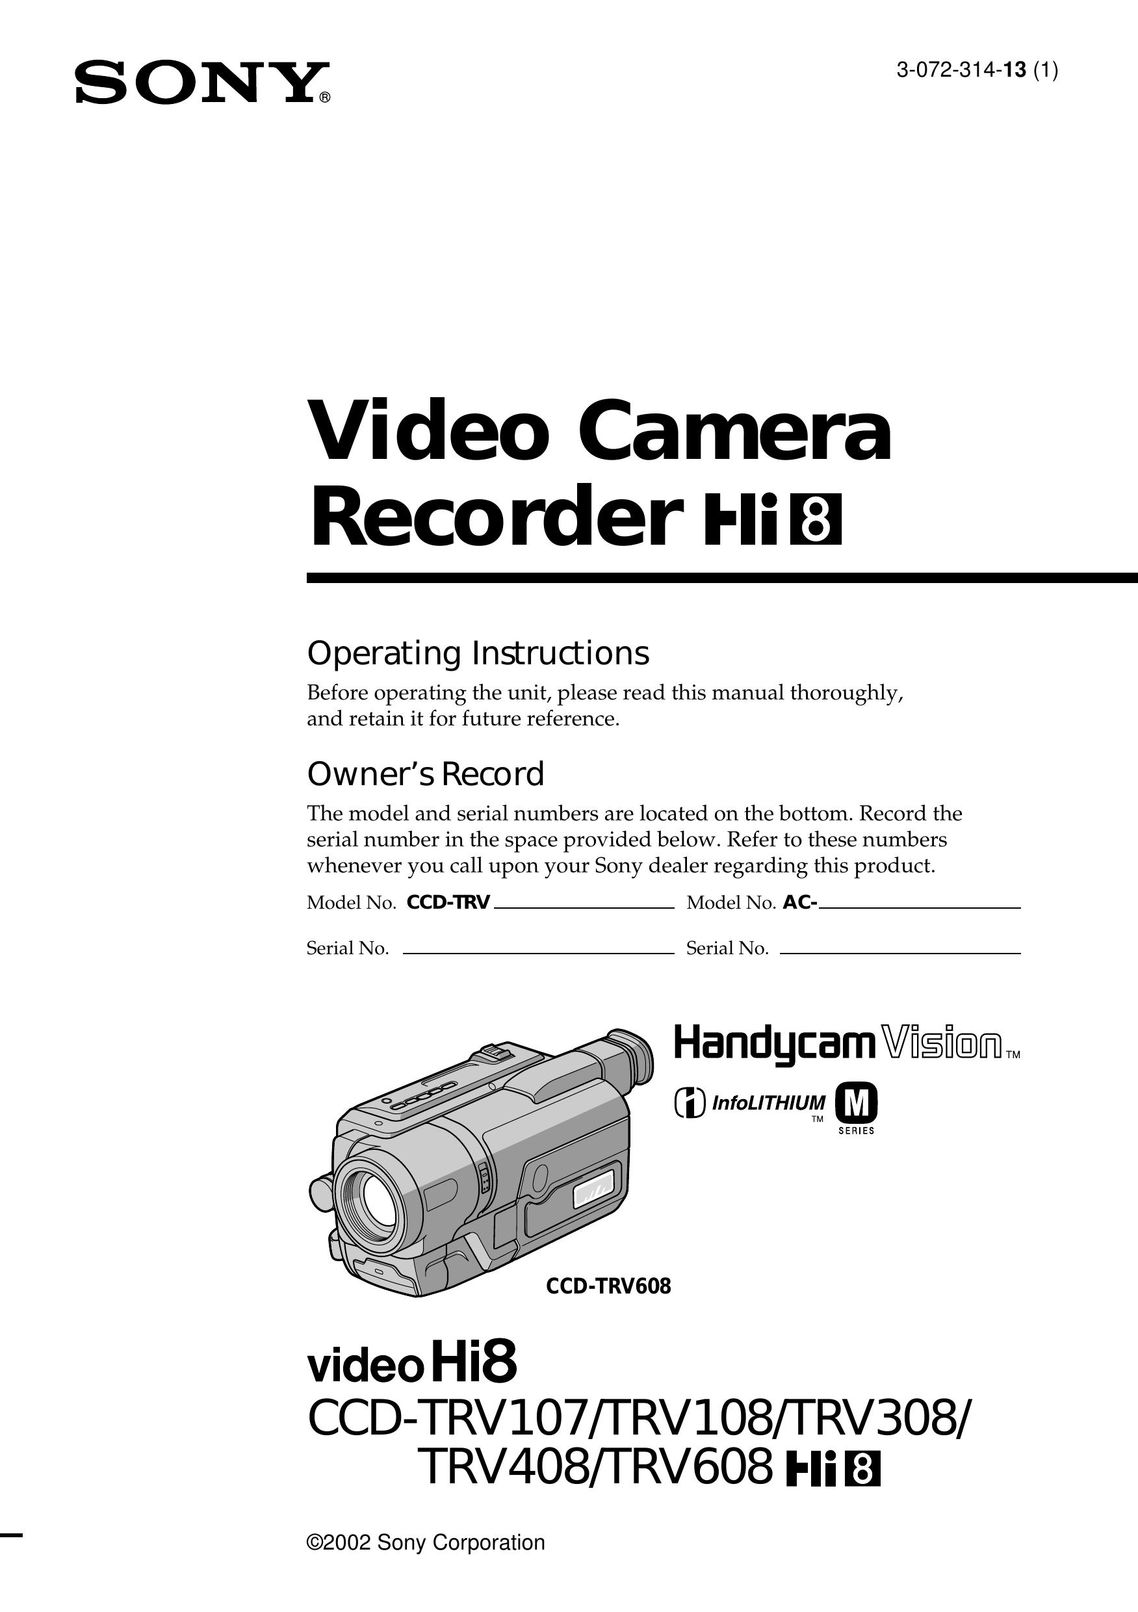 Sony CCD- TRV408 VCR User Manual